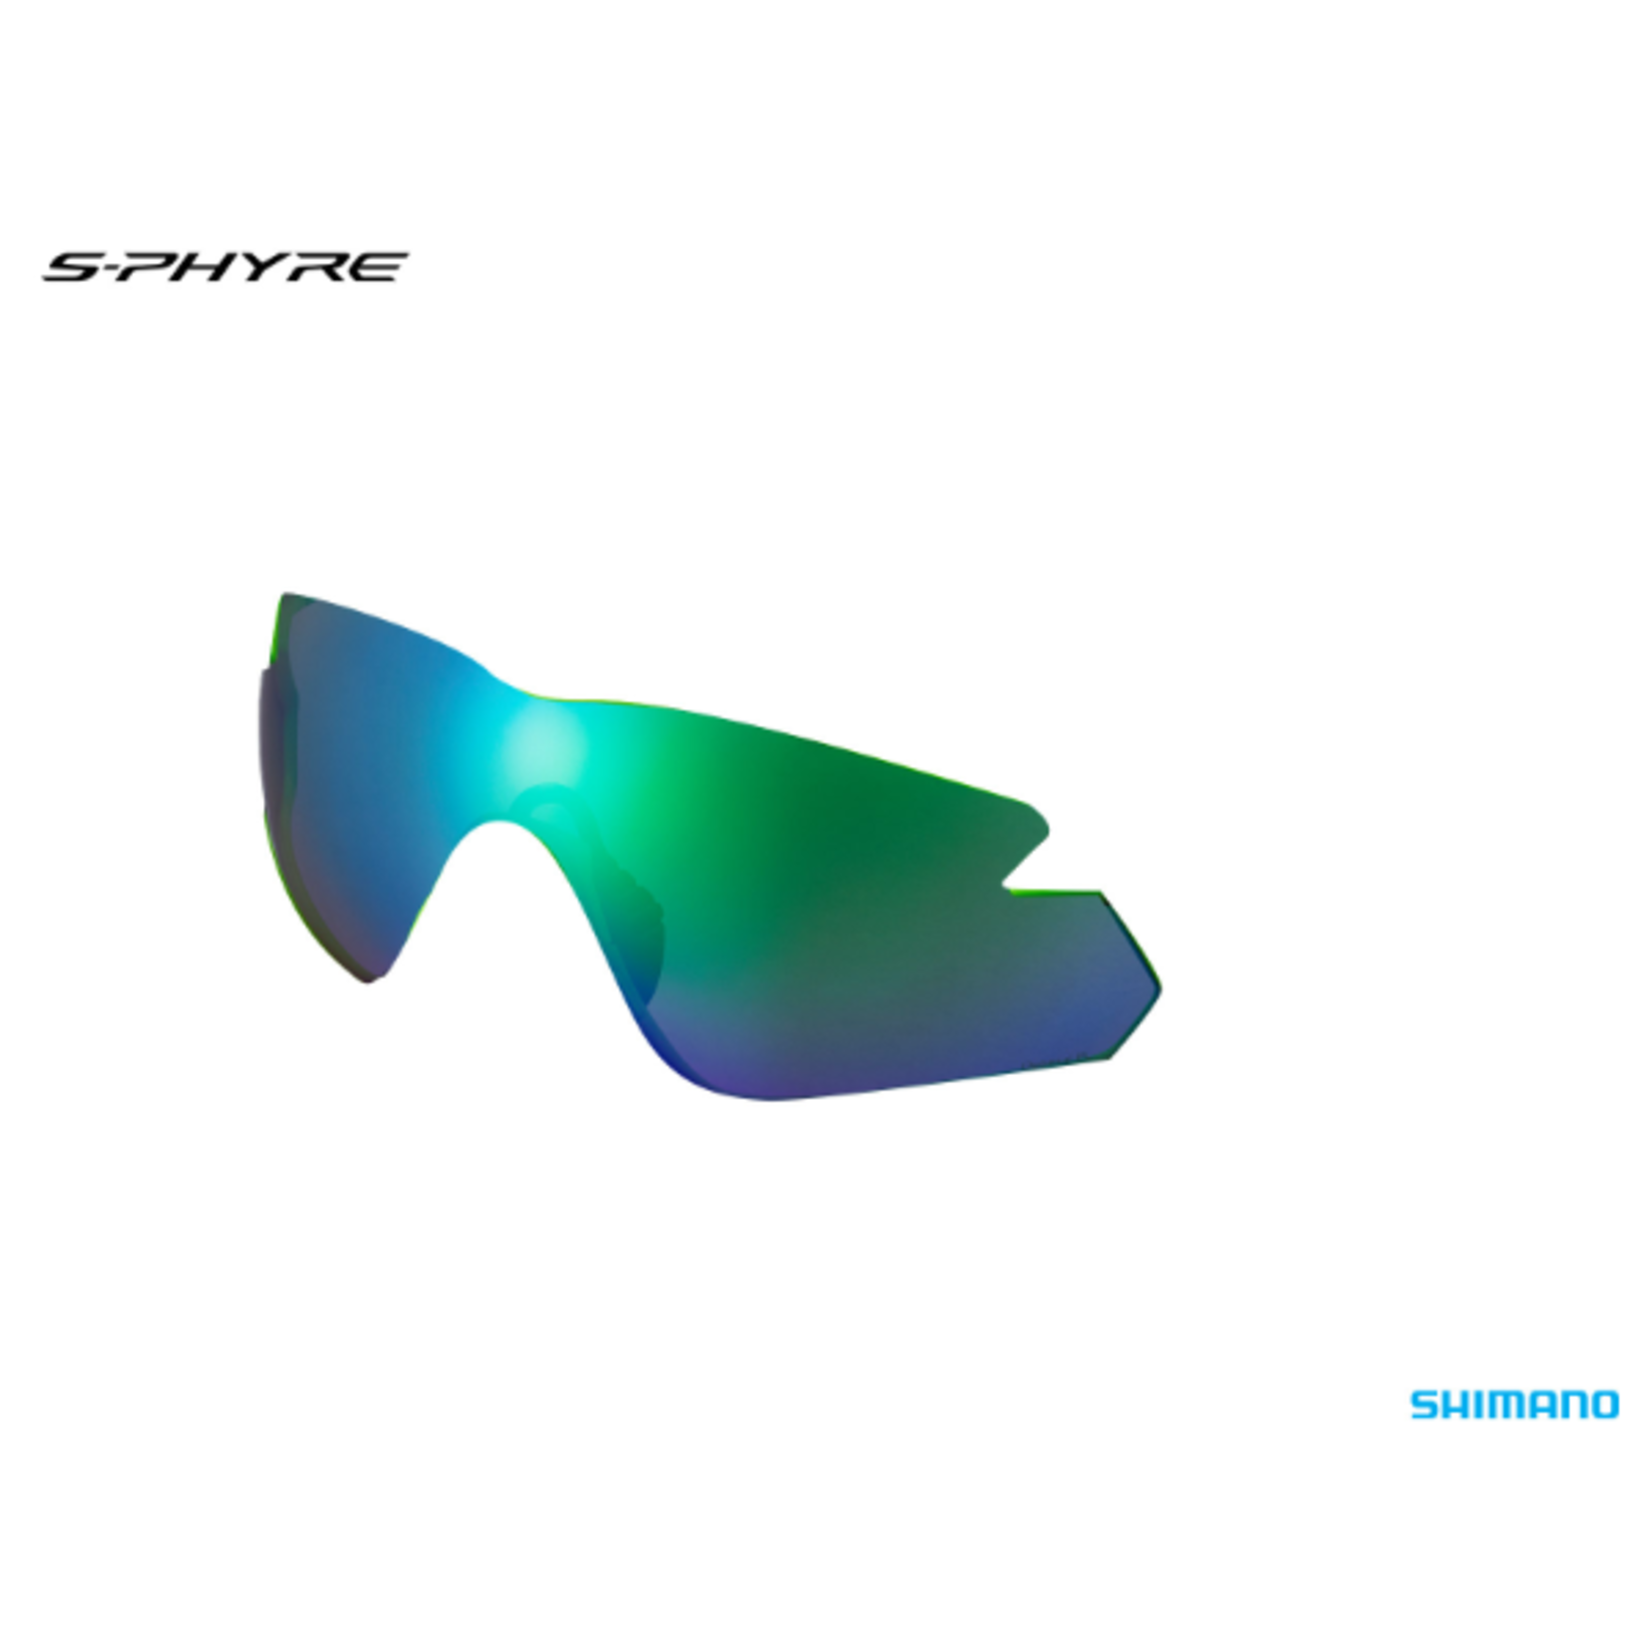 Shimano Shimano Eyewear Spare Lens - S-Phyre X Sphx1 - Optimal Pl Green Mlc